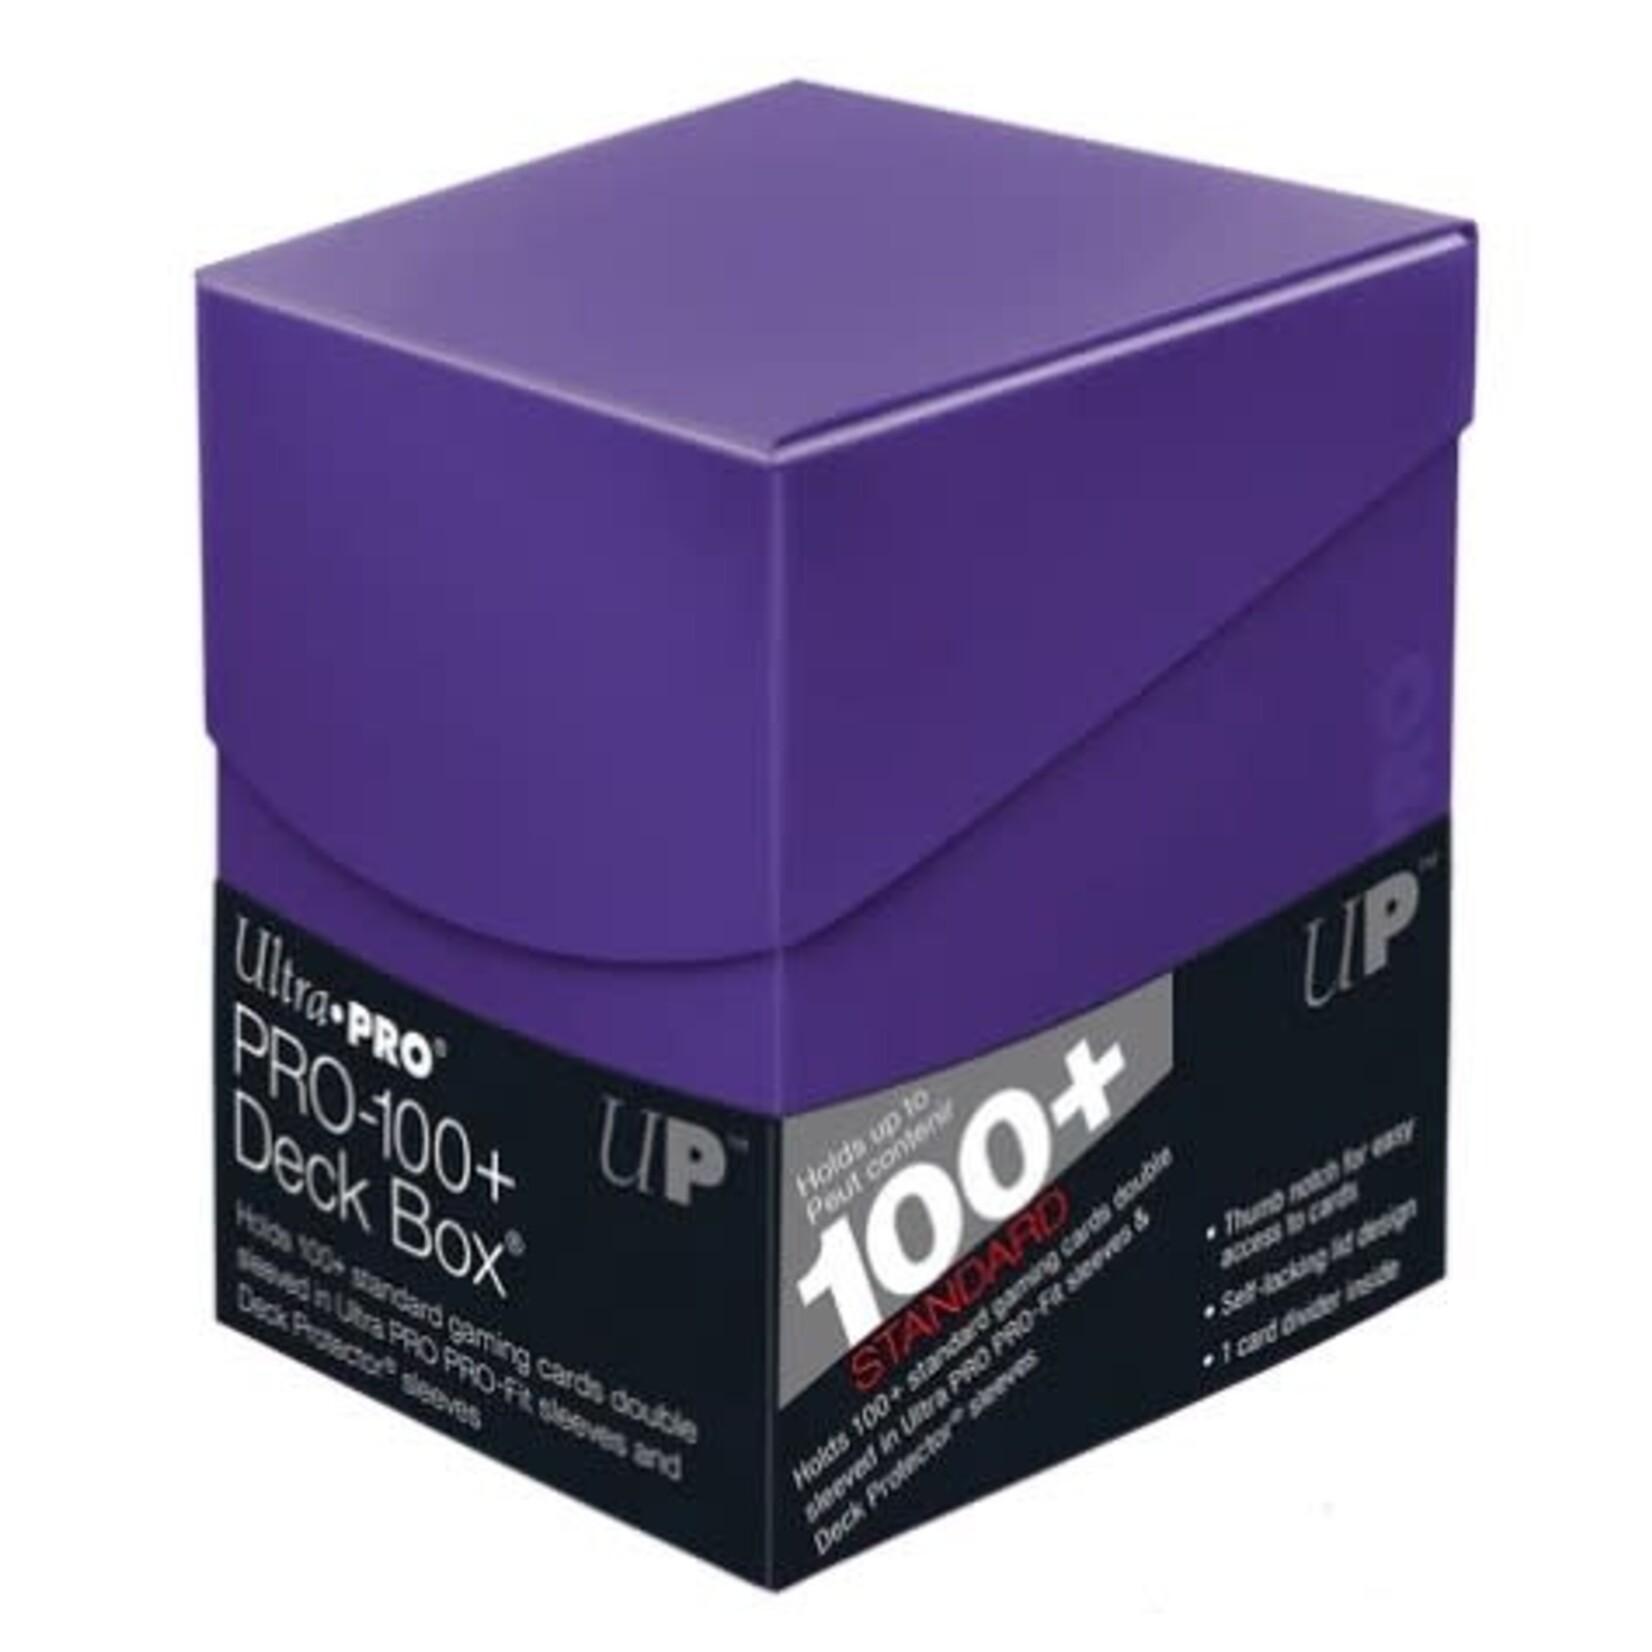 Ultra Pro Pro 100+ Eclipse Deck Box: Royal Purple